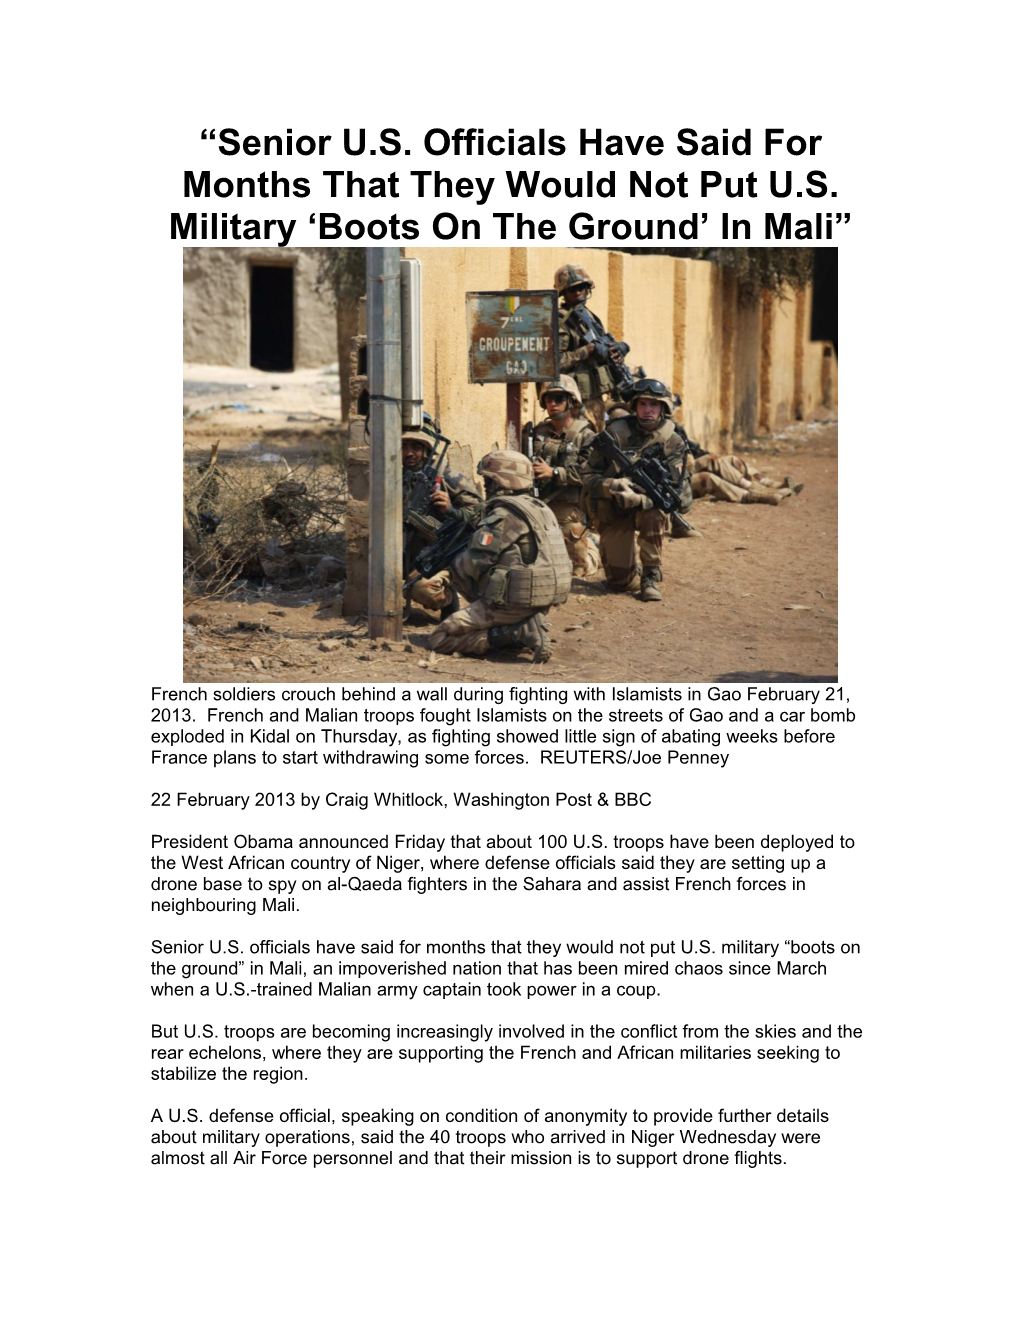 Obama Sends 100 U.S. Troops to Back French War on Mali